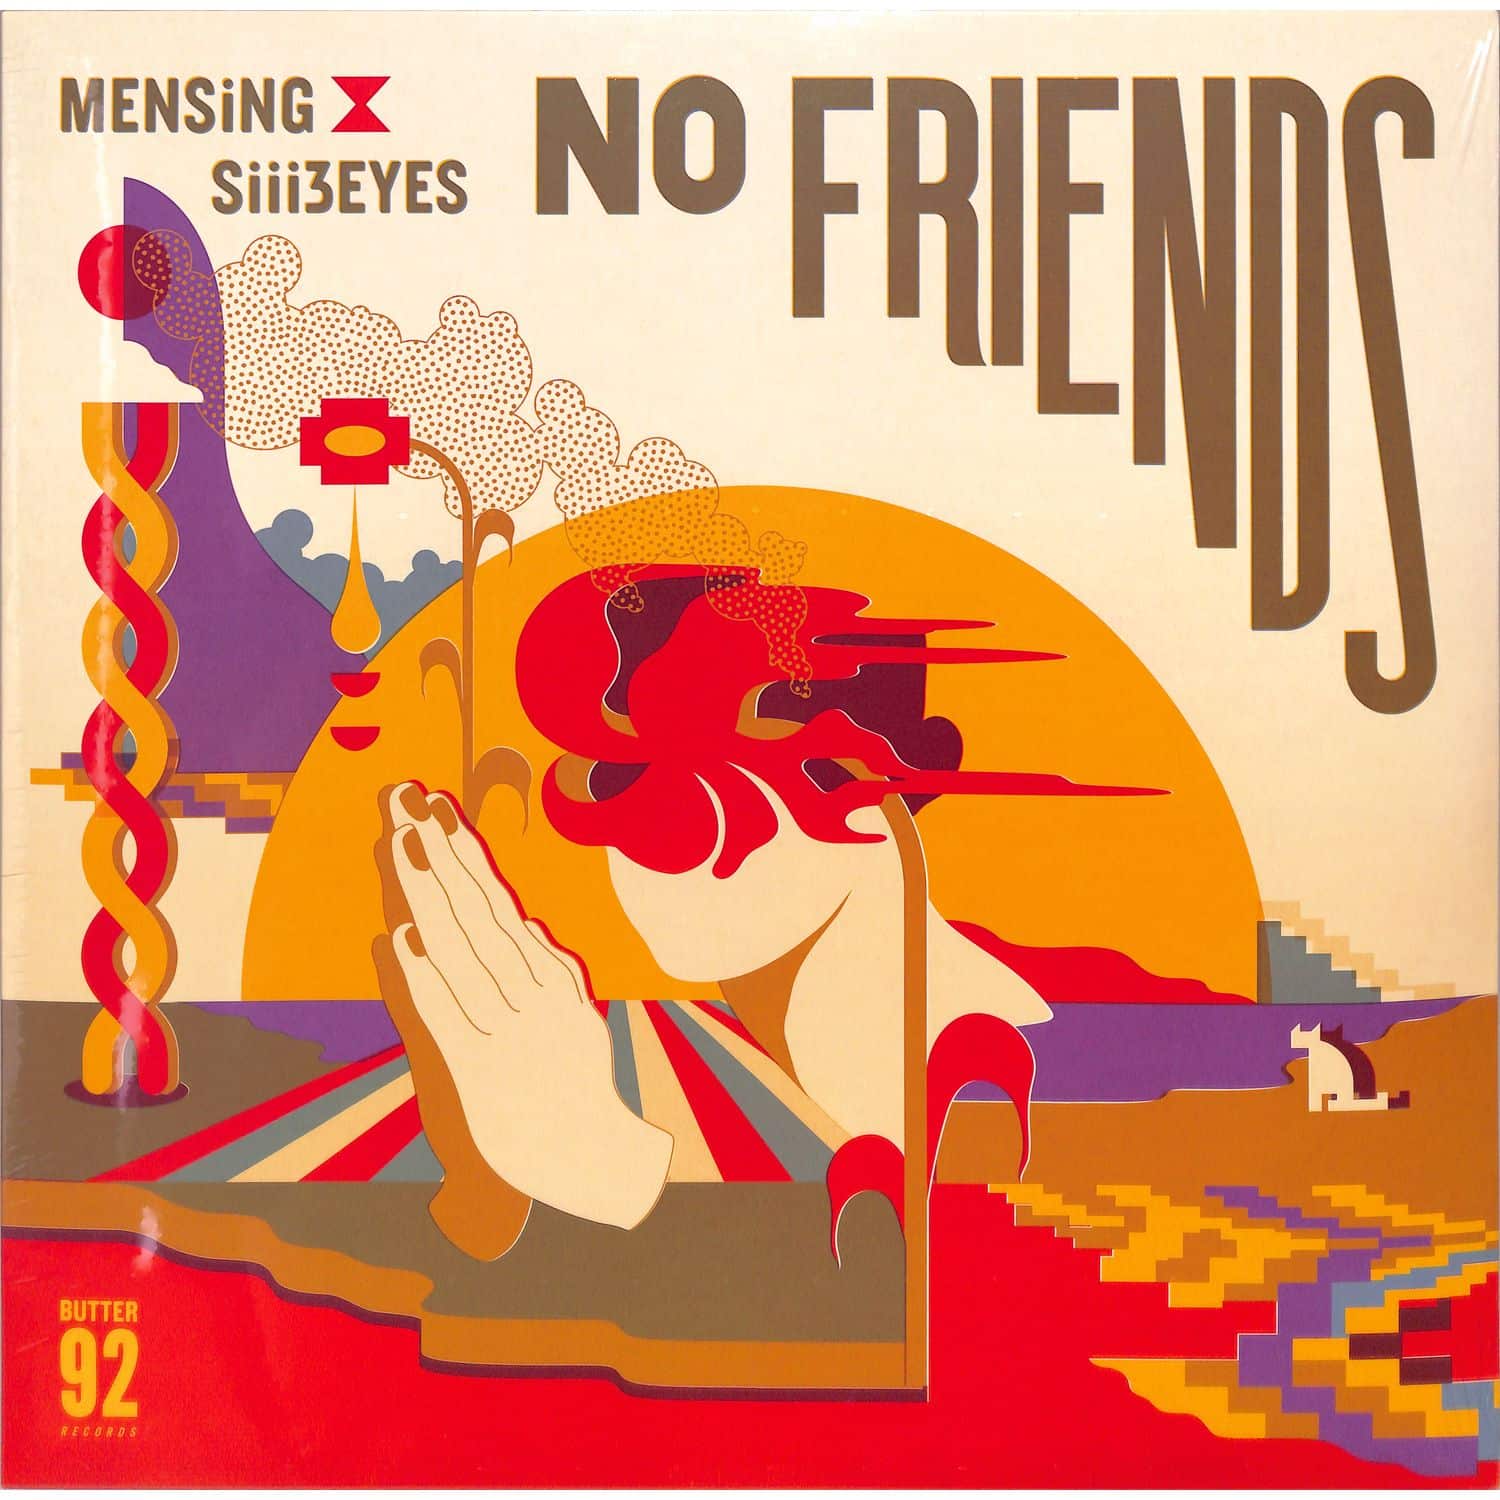 Mensing x siii3eyes - NO FRIENDS 